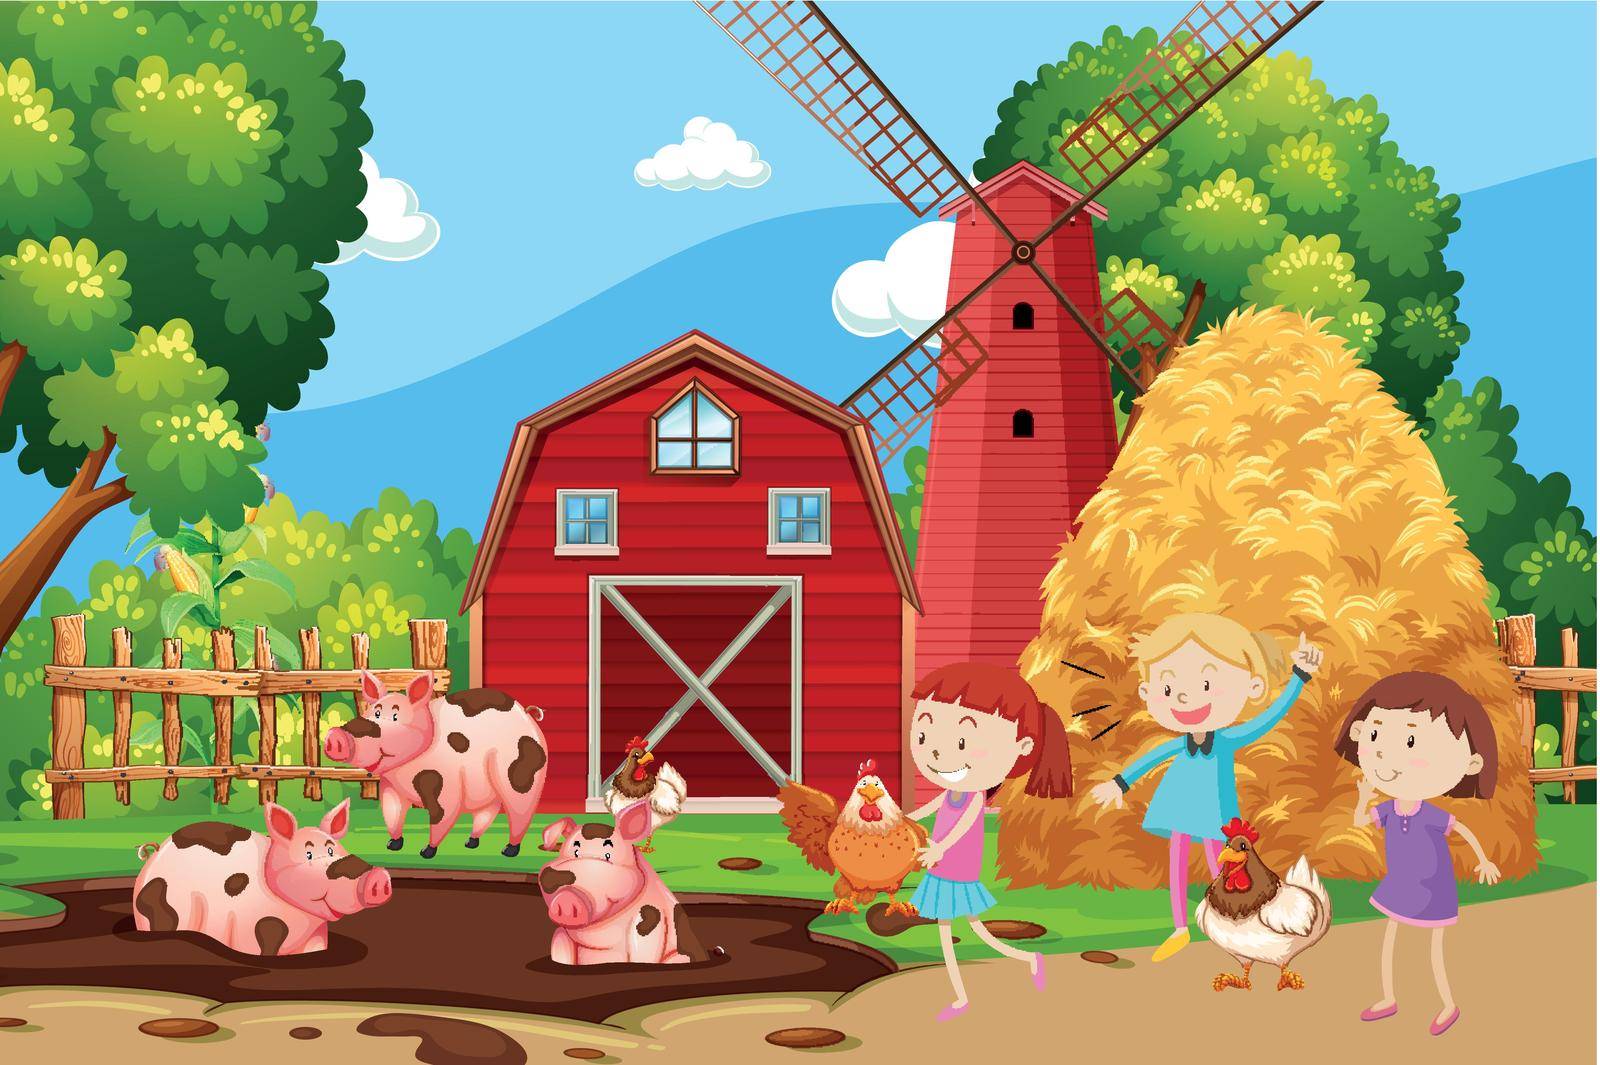 Children playing at the farmland illustration